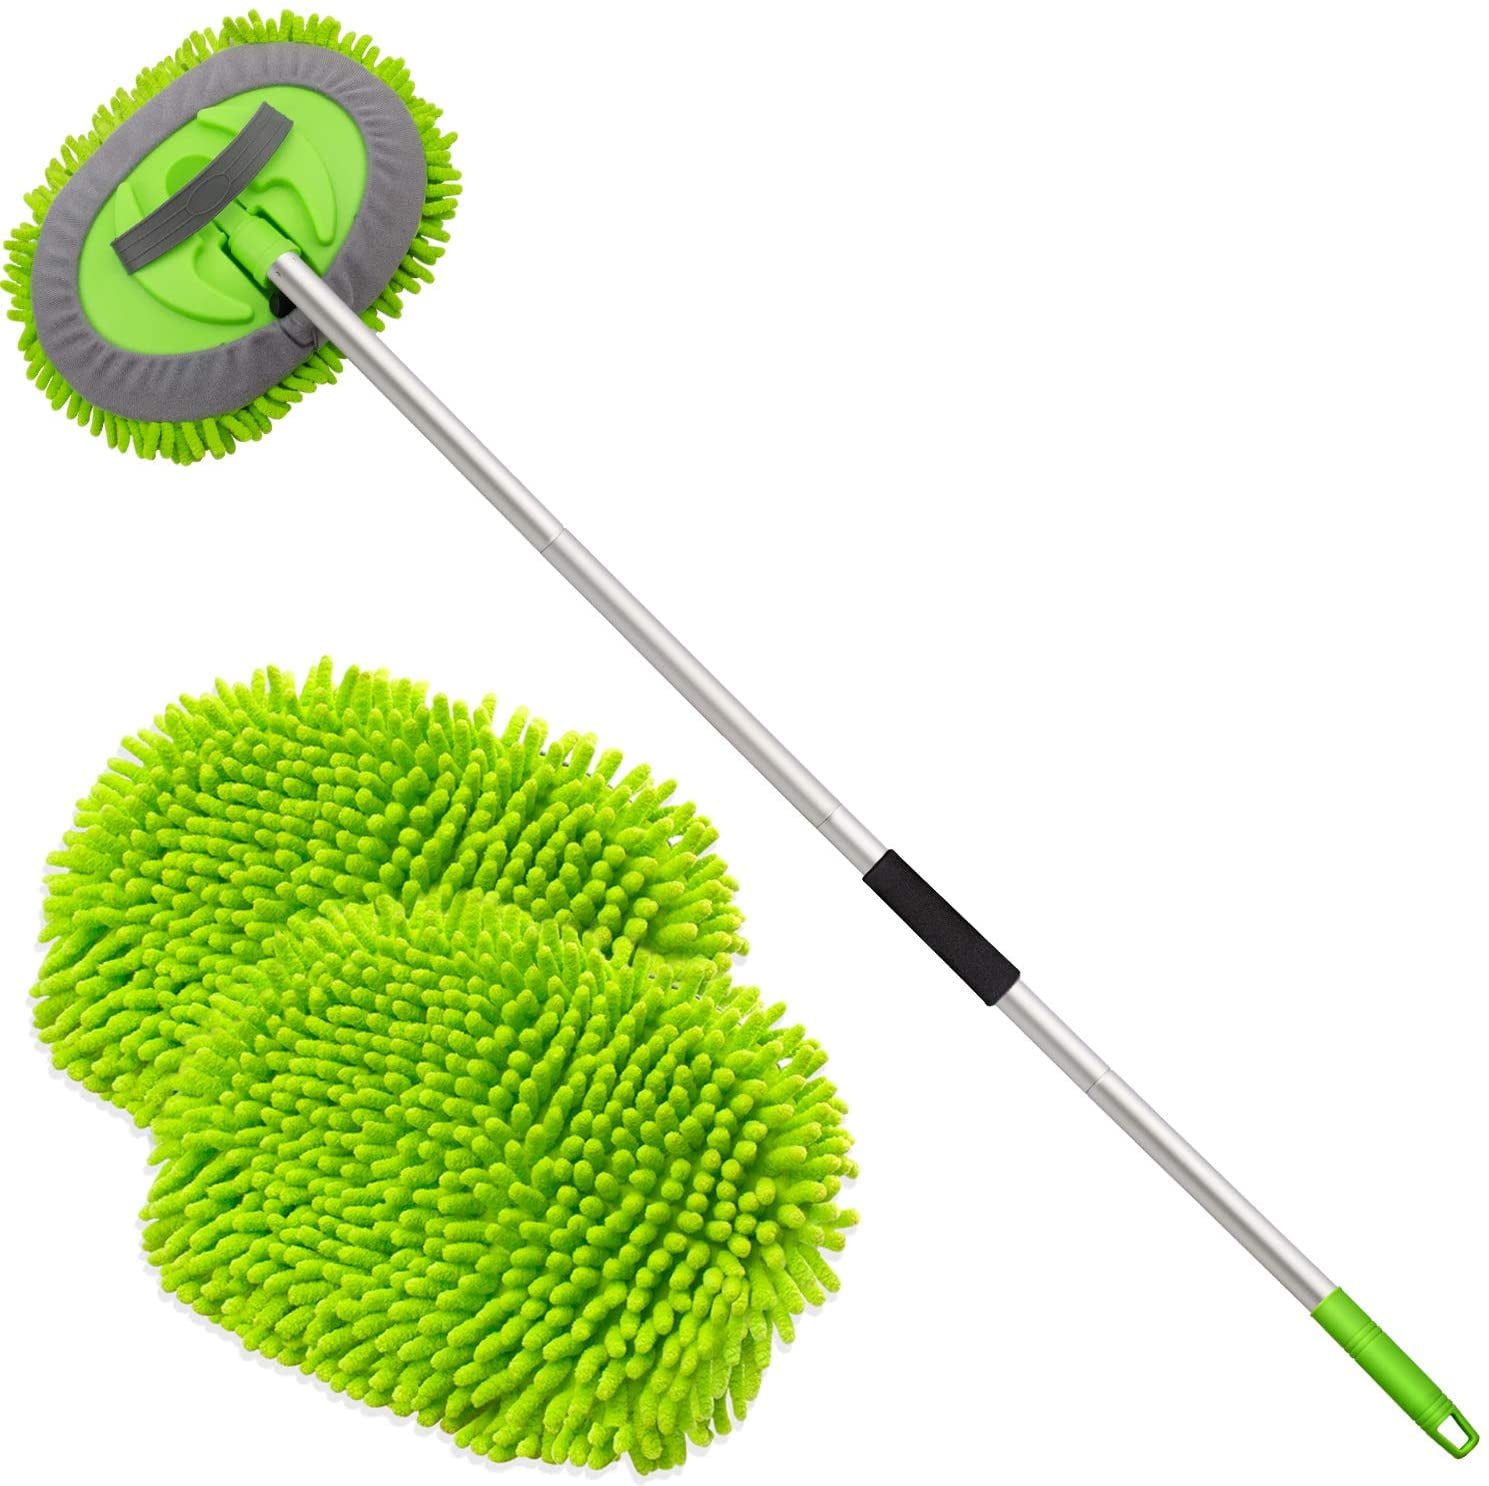 Tnarru Flexible Car Wheel Brush Wash Tool Reusable Portable Microfiber Soft Cleaning Brush for Spokes Door Vehicles Trucks Blue, Size: 27cmx5cm